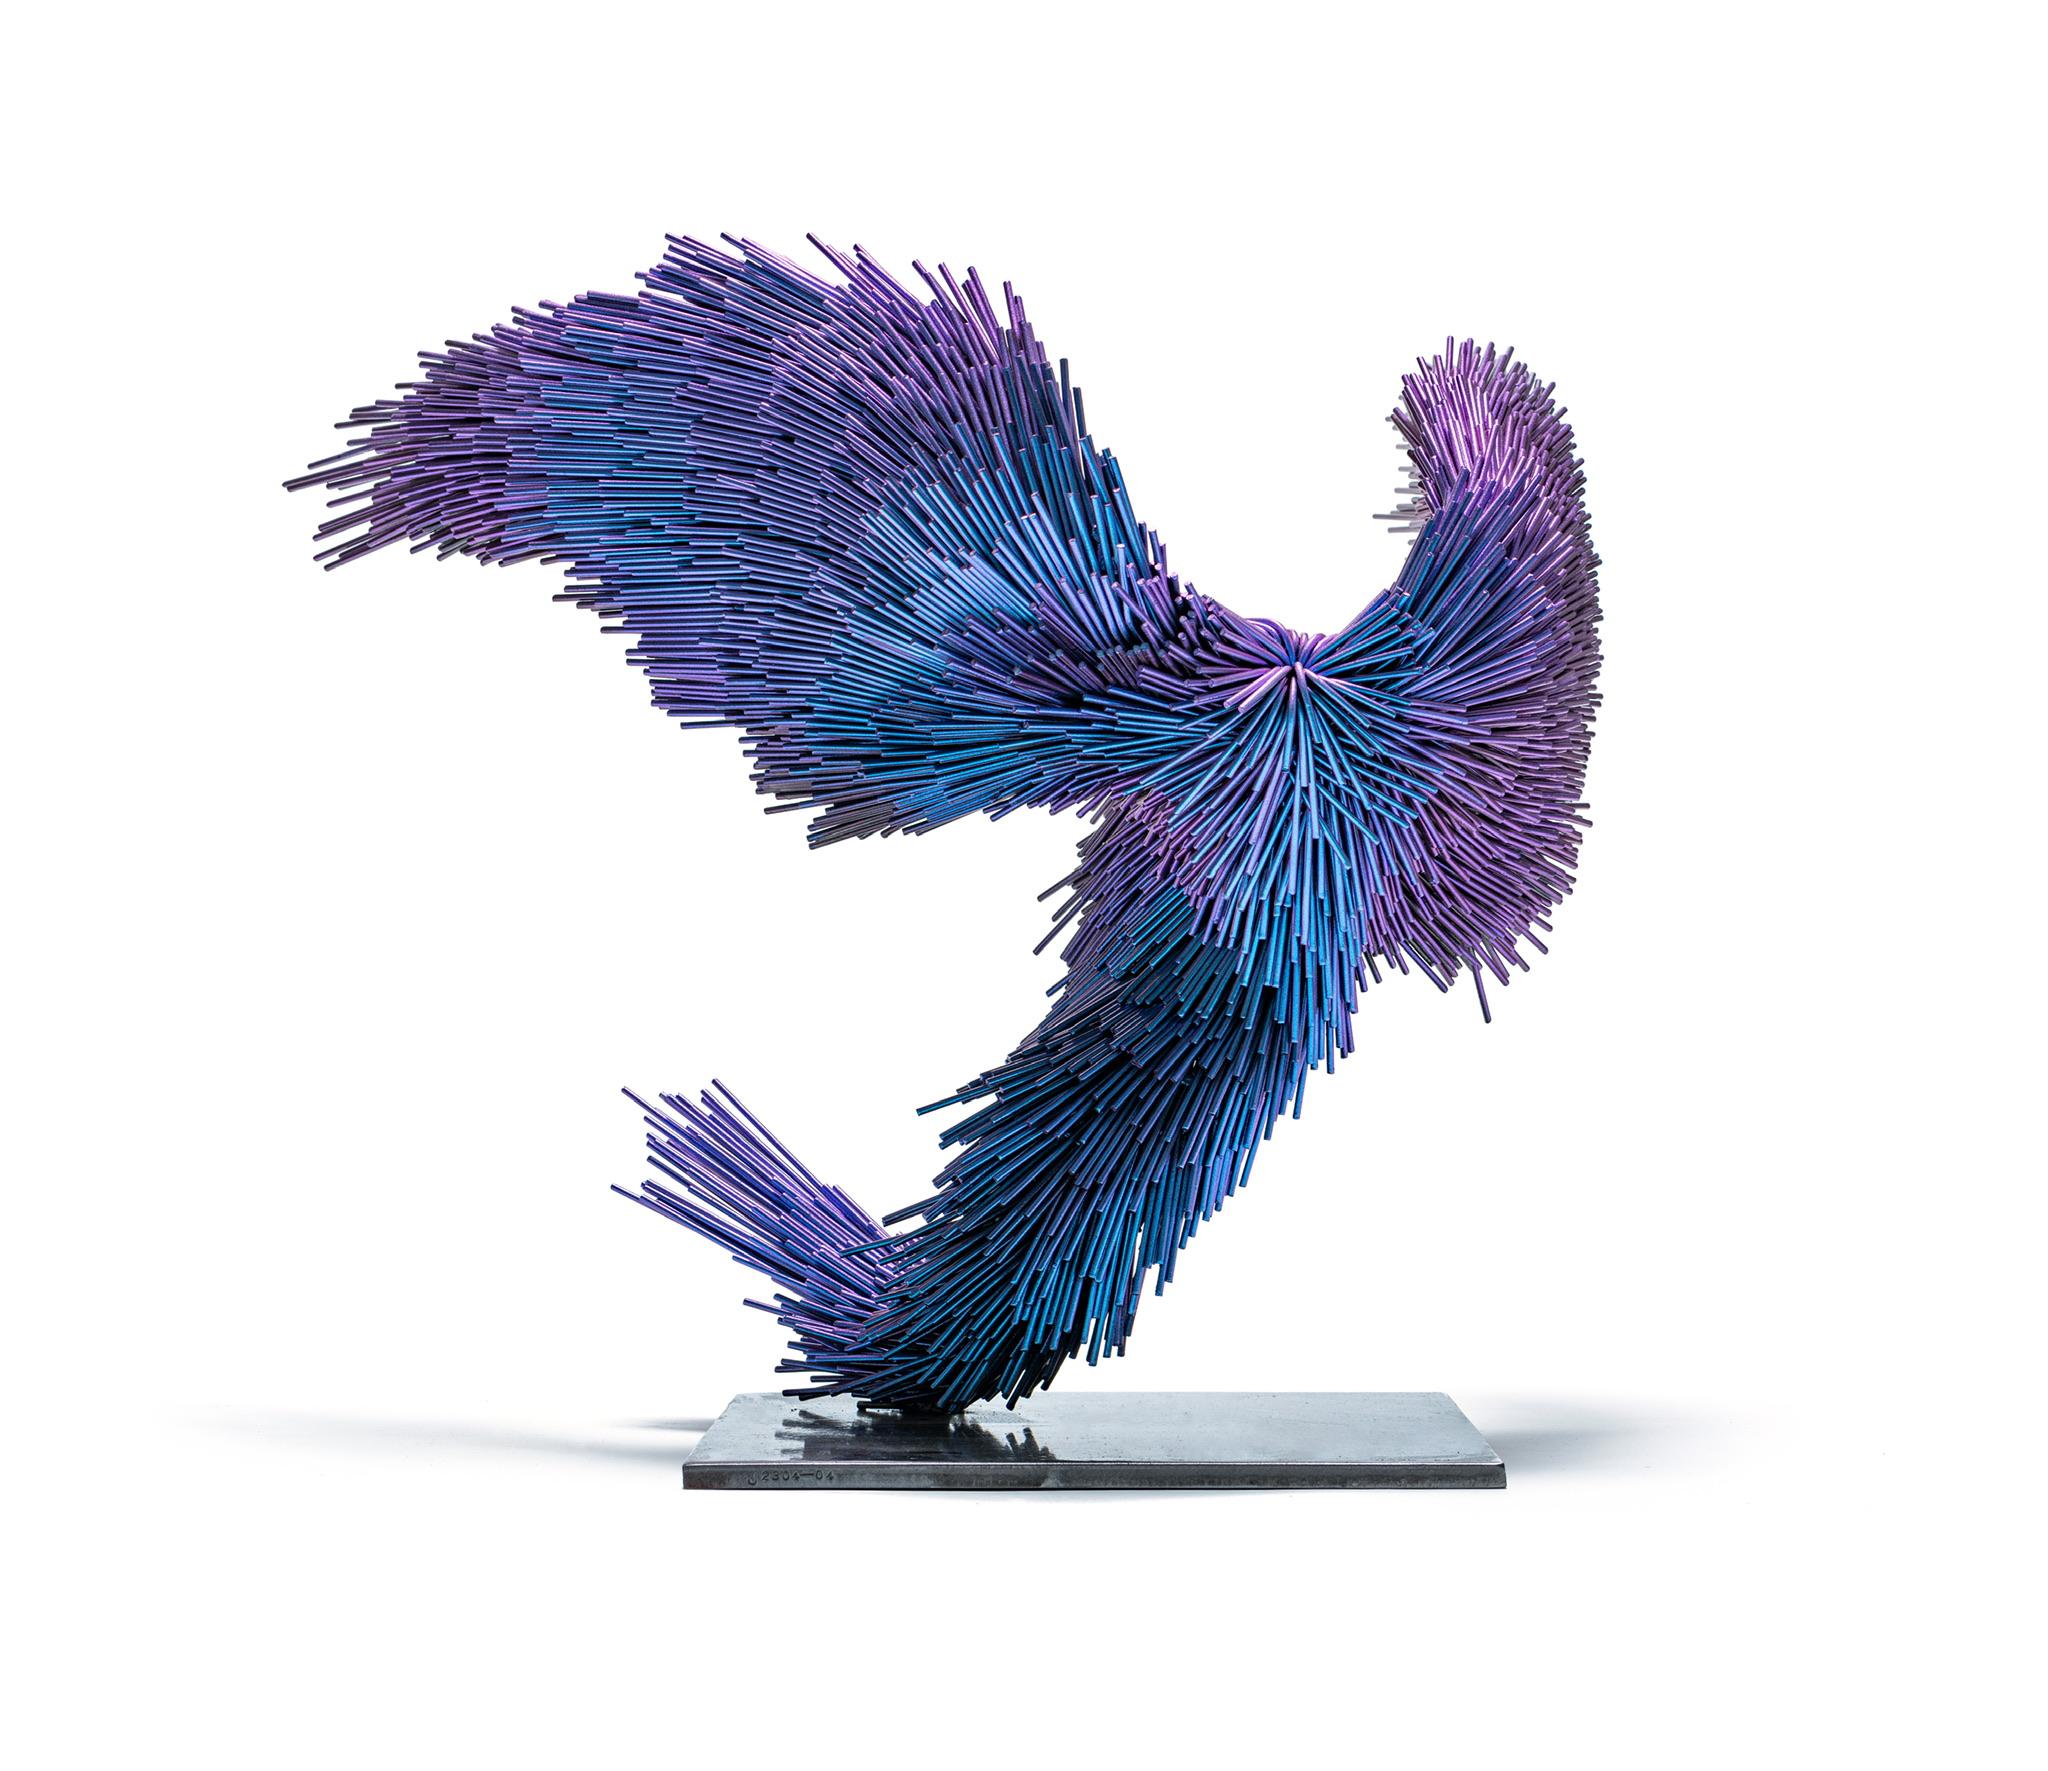 Jake Michael Singer Figurative Sculpture - Indigo Murmur, Steel contemporary bird sculpture in purple